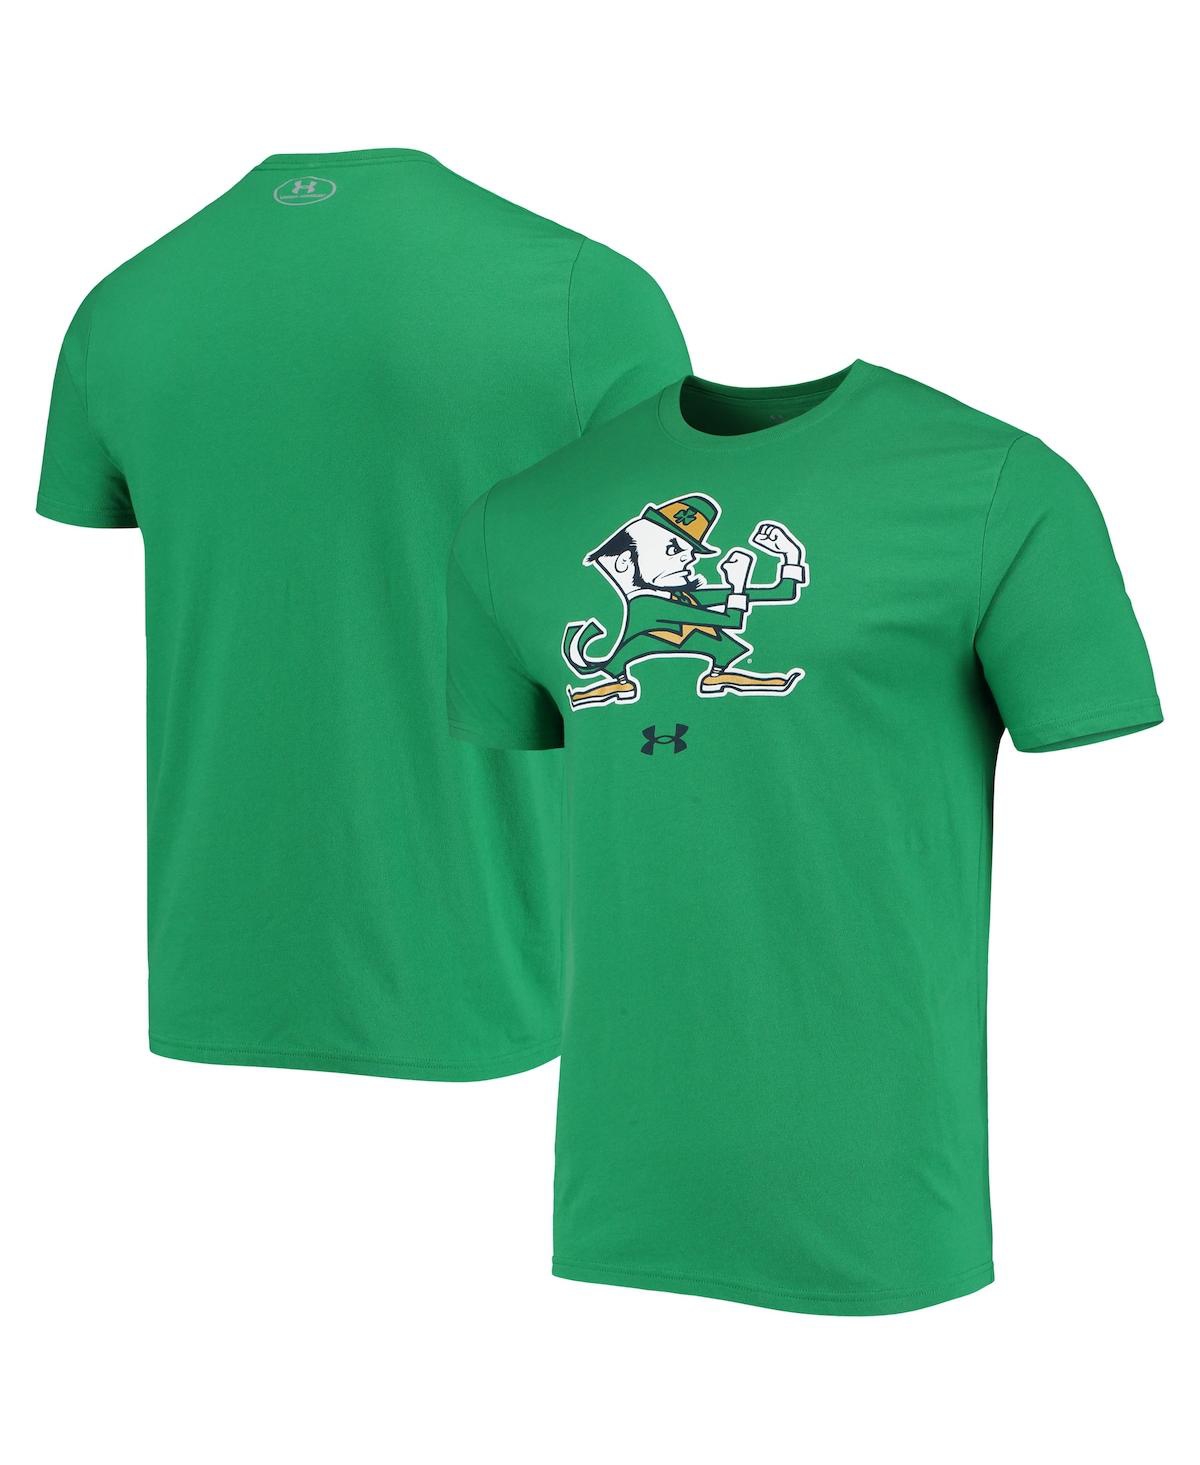 Under Armour Men's  Kelly Green Notre Dame Fighting Irish Mascot Logo Performance Cotton T-shirt